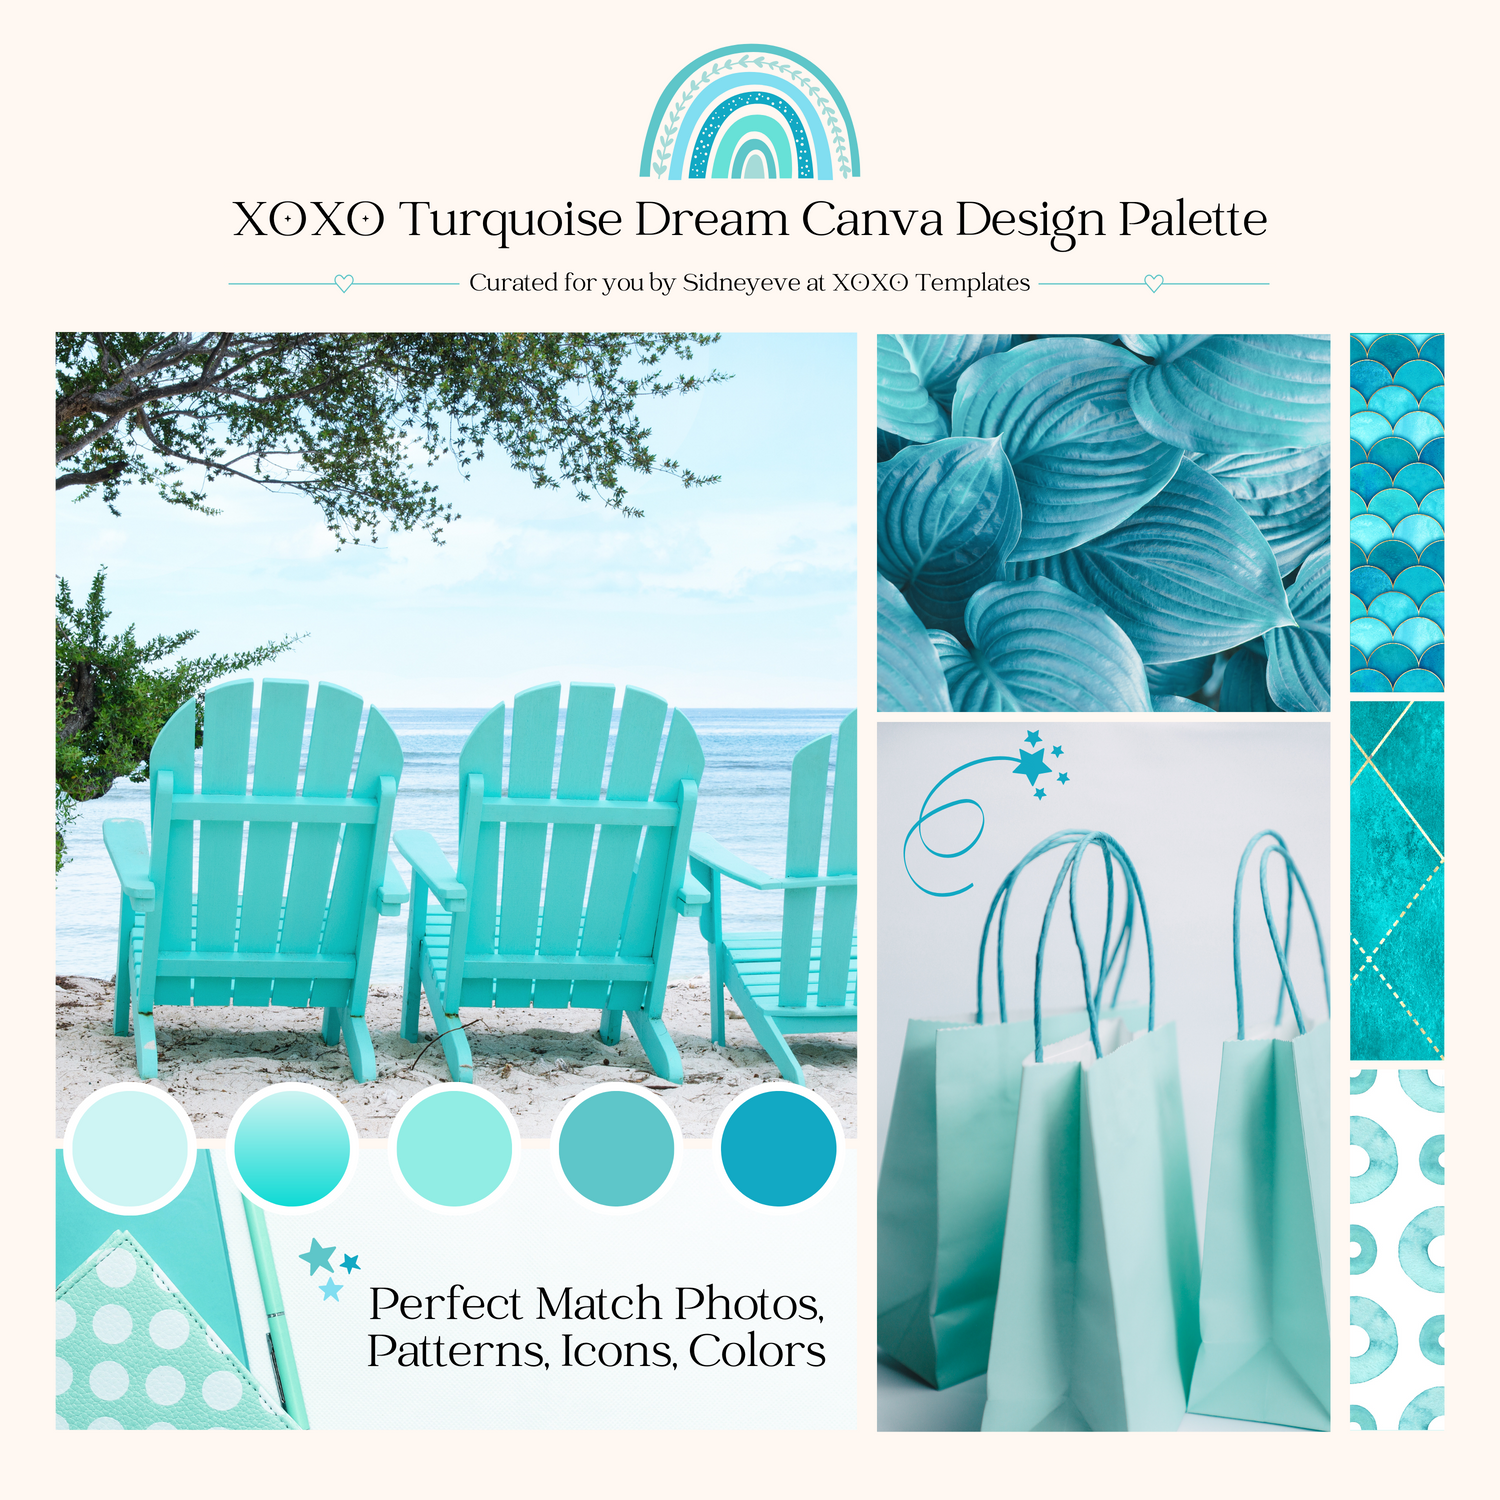 Turquoise Dream Canva Design Palette